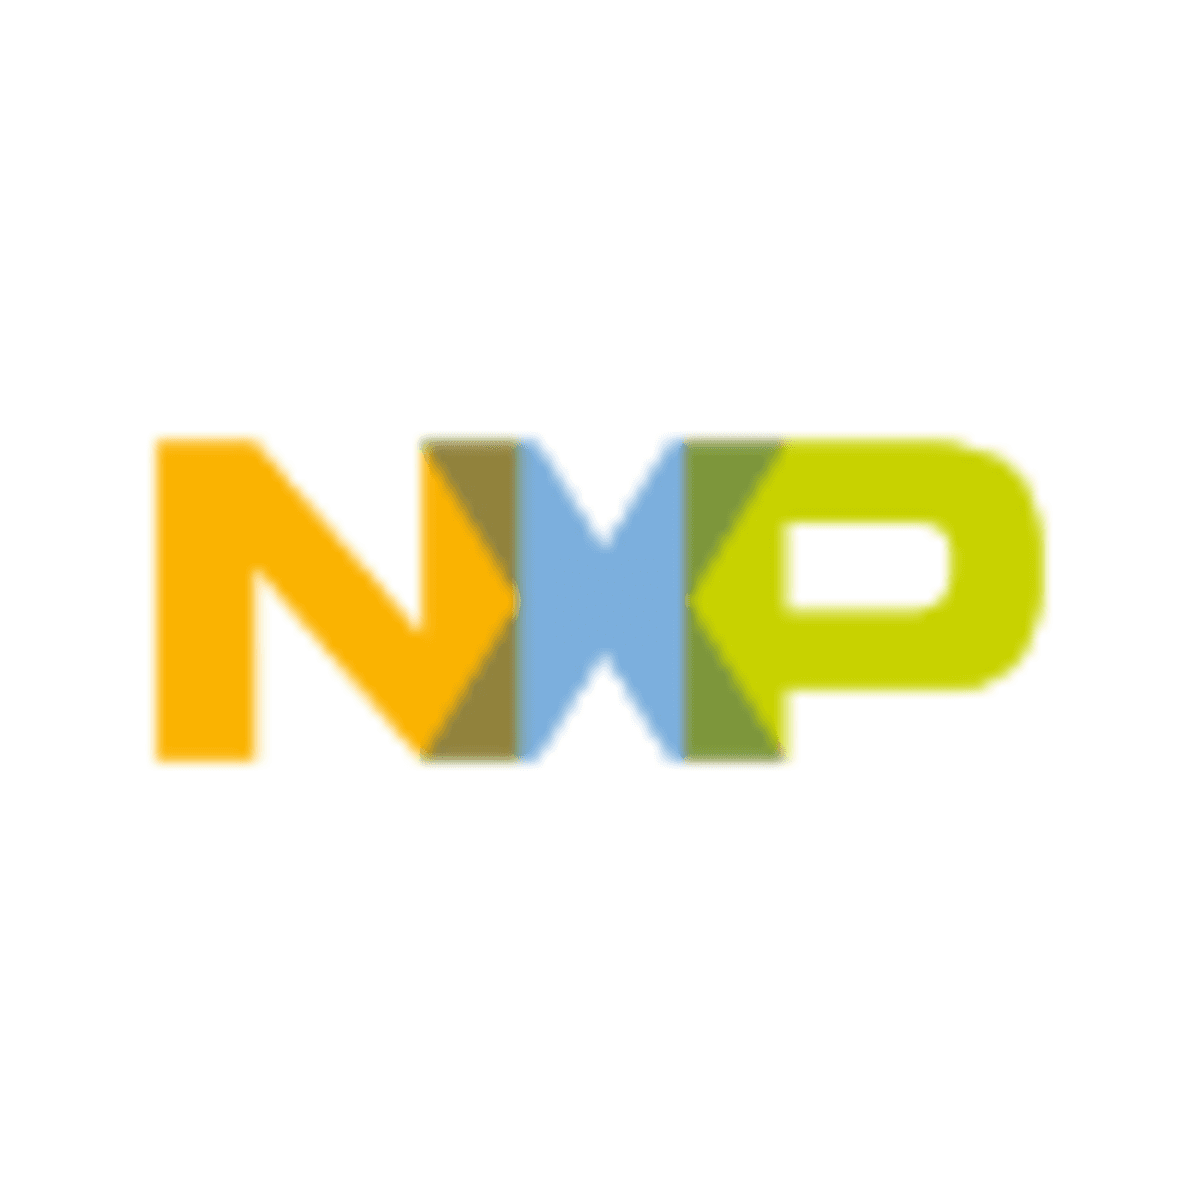 NXP Semiconductors selecteert TCS als strategisch partner image